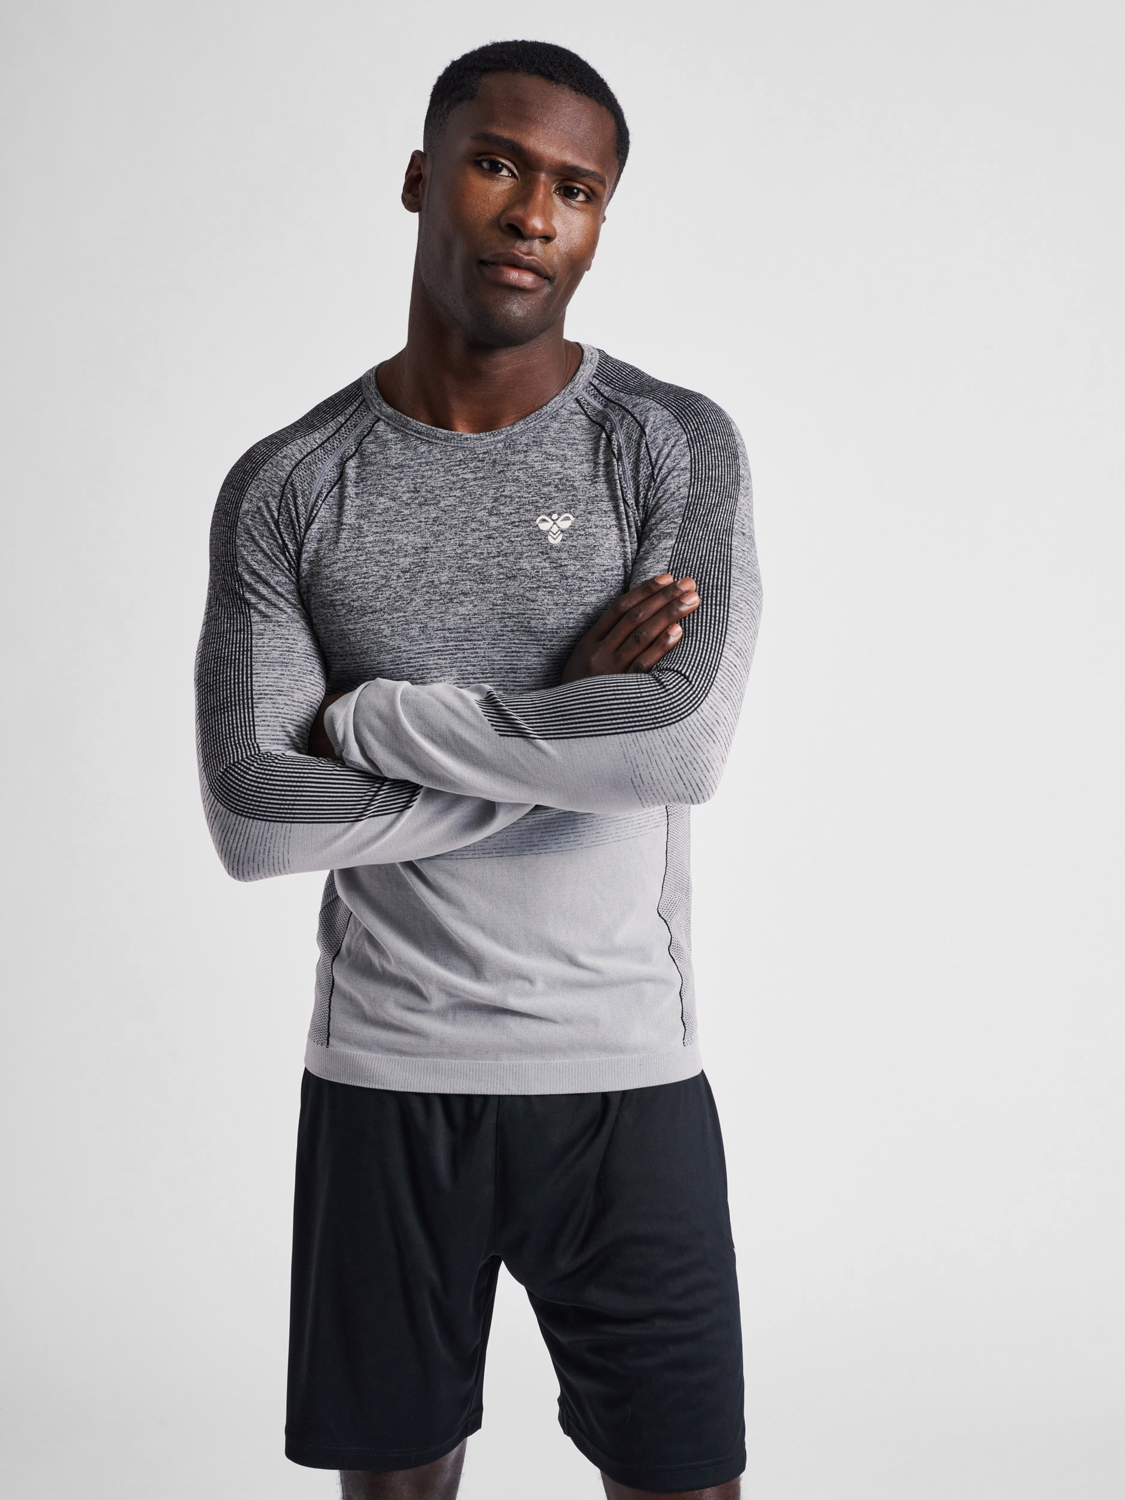 Details about   Hummel Core Mens Football Sports Training Workout Long Sleeve Jersey Shirt Top 